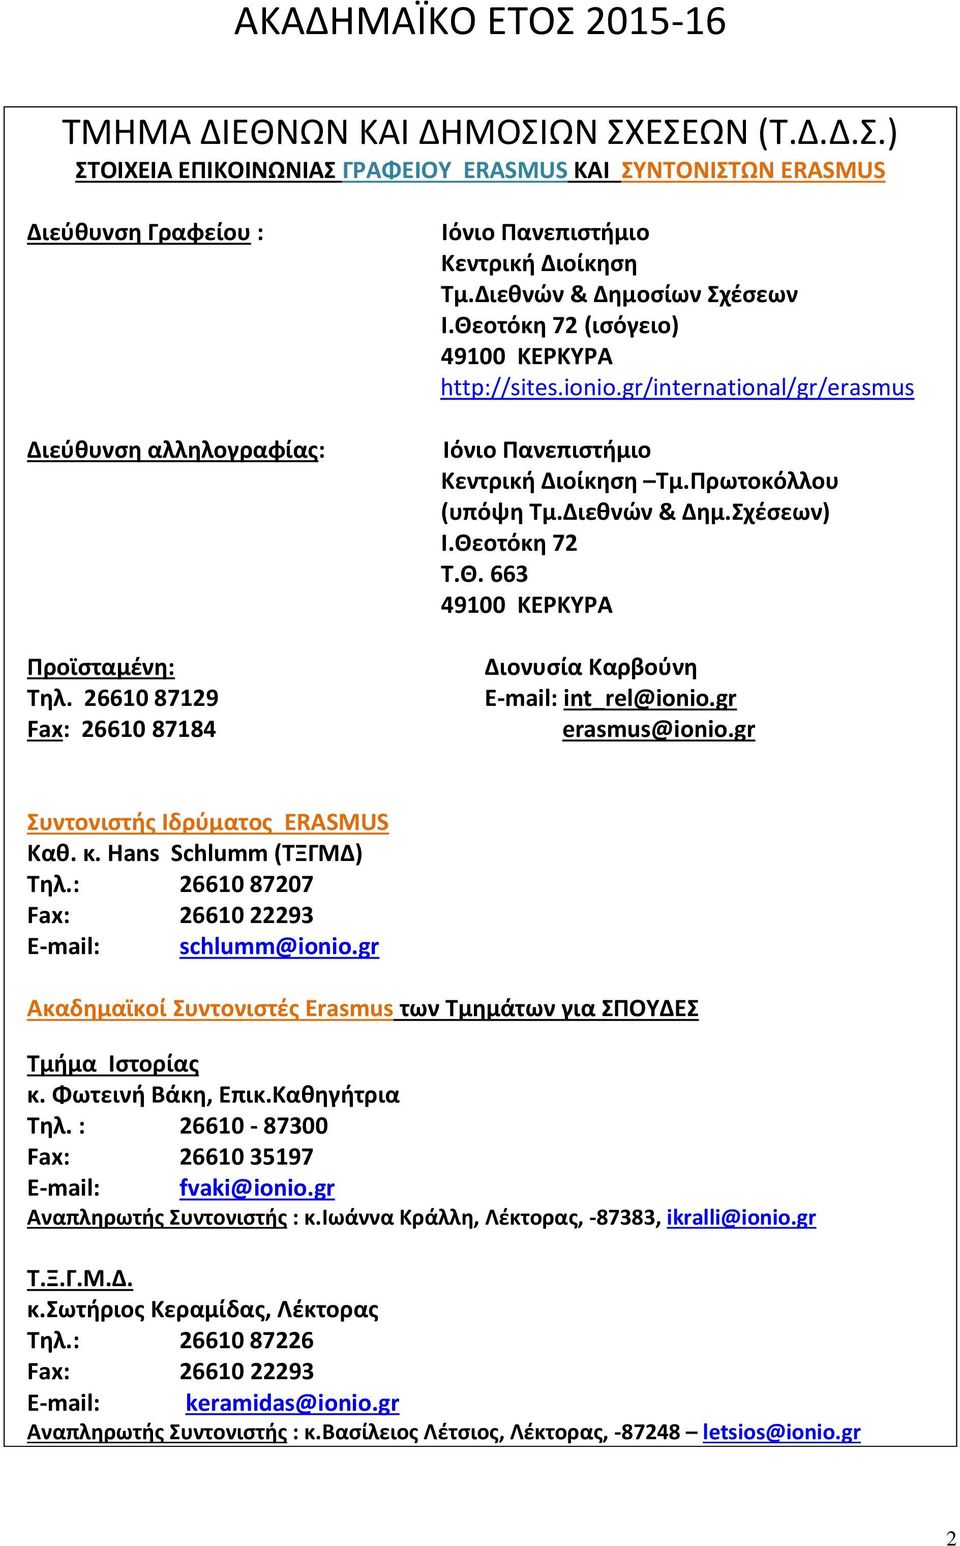 gr/international/gr/erasmus Ιόνιο Πανεπιστήμιο Κεντρική Διοίκηση Τμ.Πρωτοκόλλου (υπόψη Τμ.Διεθνών & Δημ.Σχέσεων) Ι.Θεοτόκη 72 Τ.Θ. 663 49100 ΚΕΡΚΥΡΑ Διονυσία Καρβούνη E-mail: int_rel@ionio.